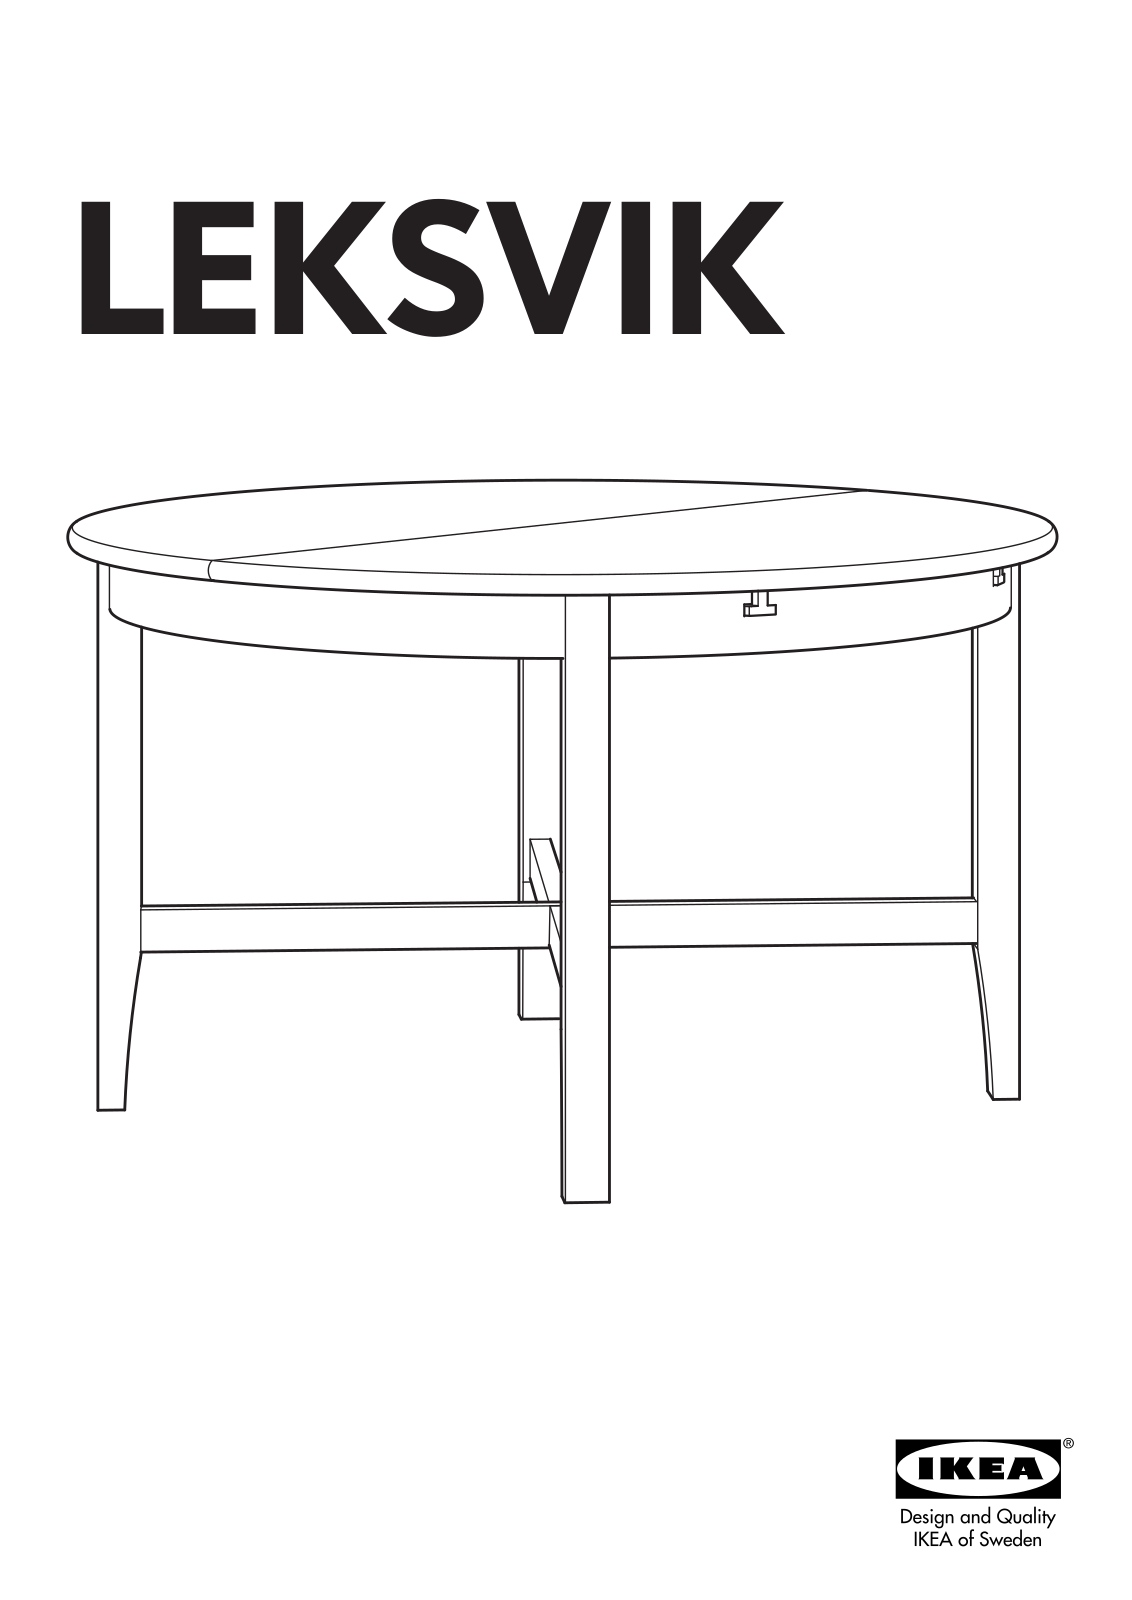 Стол икеа сборка. Стол кухонный икеа ЛЕКСВИК. Ikea leksvik стол инструкция. Сборка круглого стола икеа. Стол икеа ЛЕКСВИК круглый Размеры.